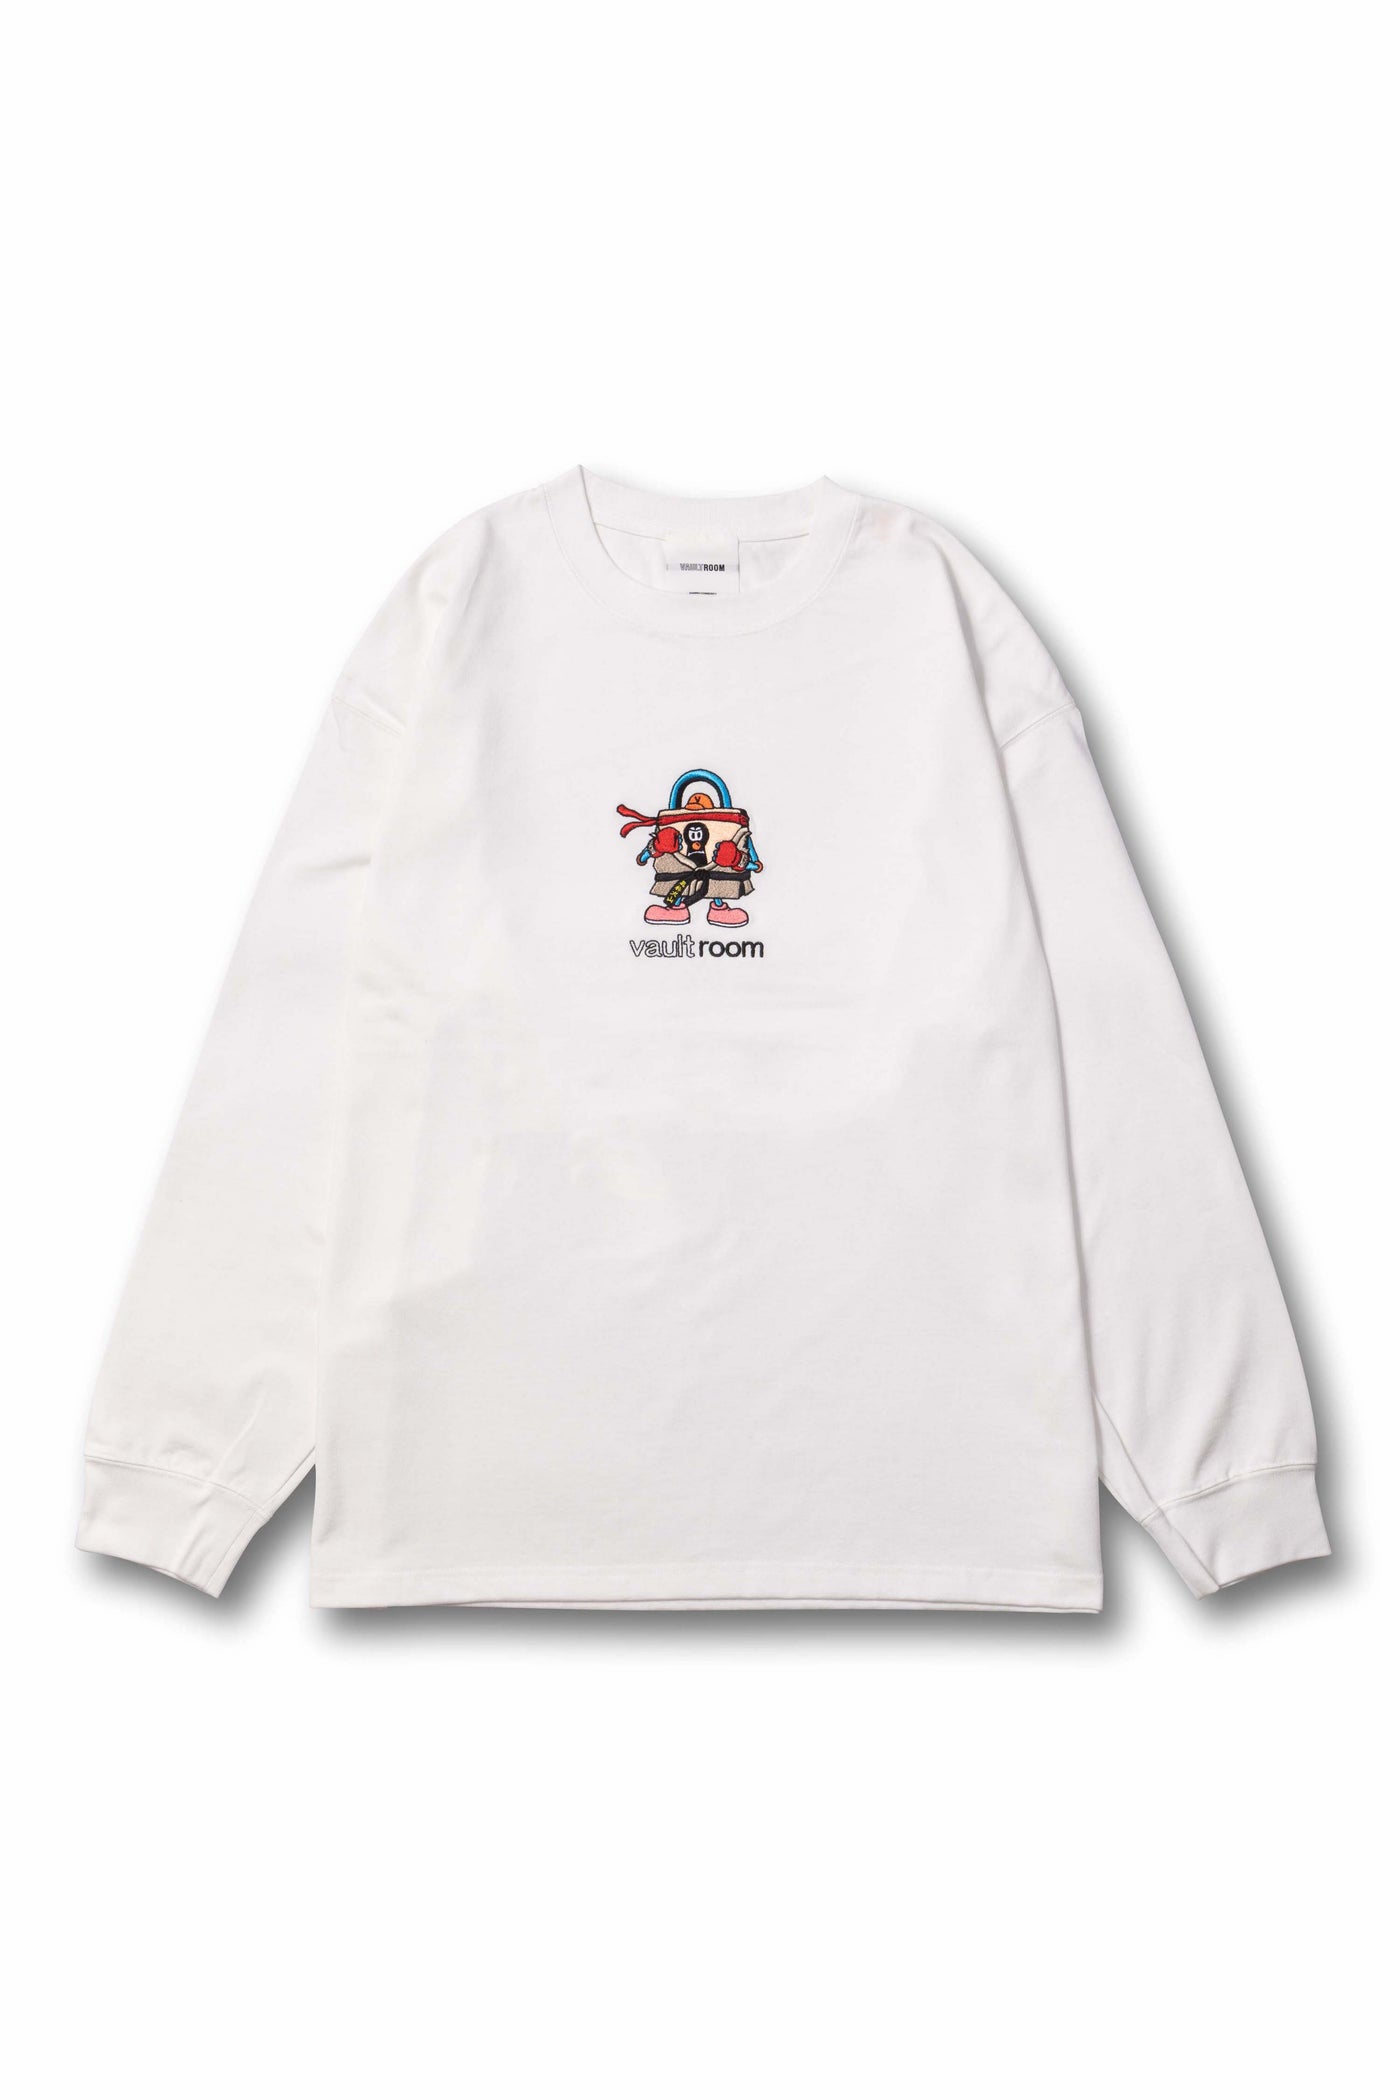 vaultroom RYU COS BIG L/S TEE / WHT - Tシャツ/カットソー(七分/長袖)